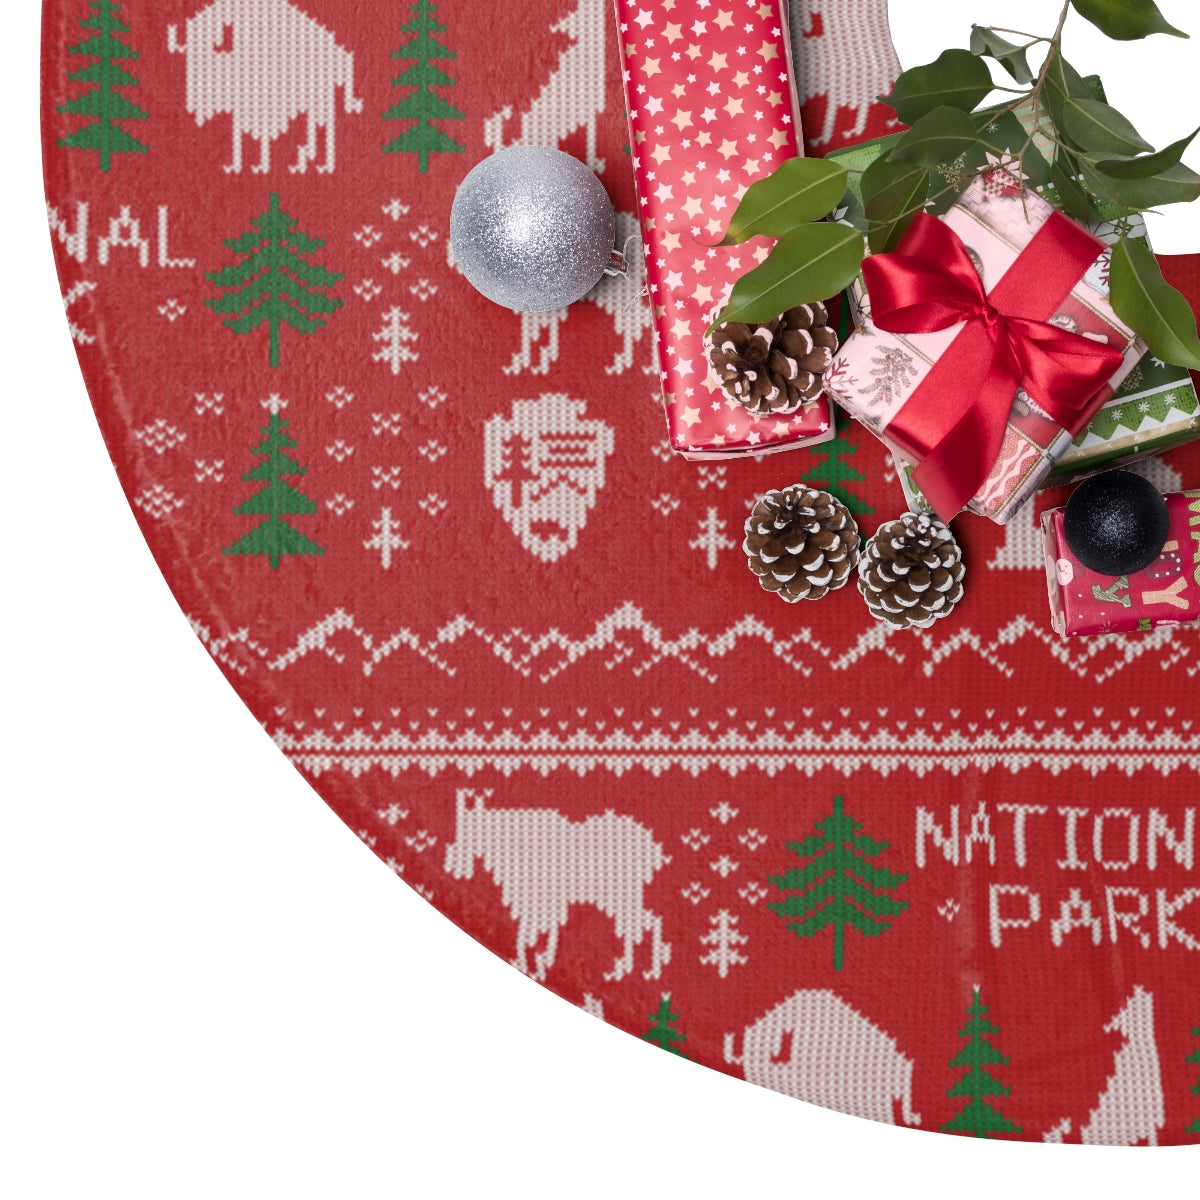 National Park Christmas Tree Skirts - Fair Isle National Park Pattern